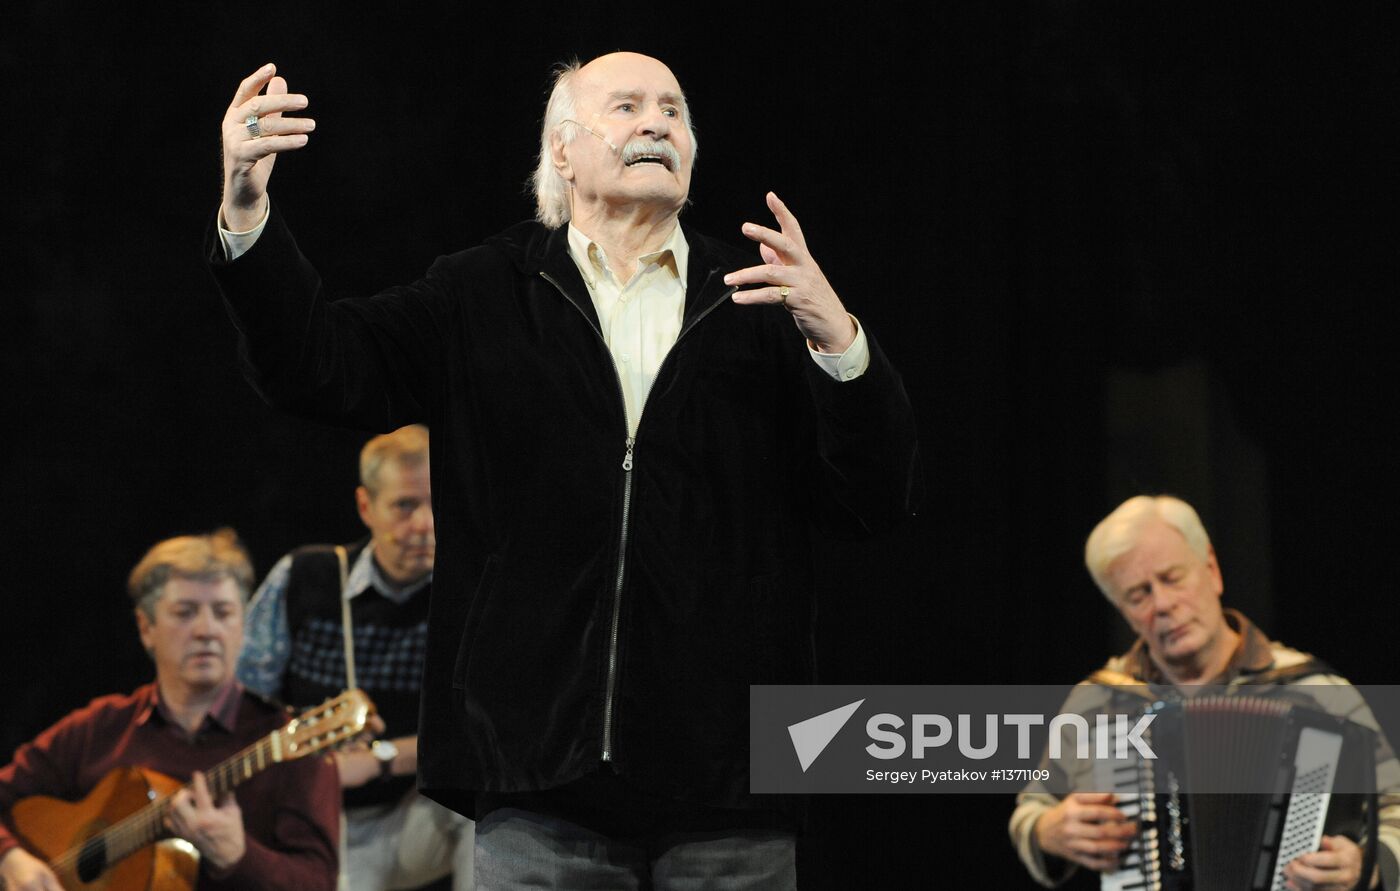 Performance of "Dancing with the Teacher" with Vladimir Zeldin